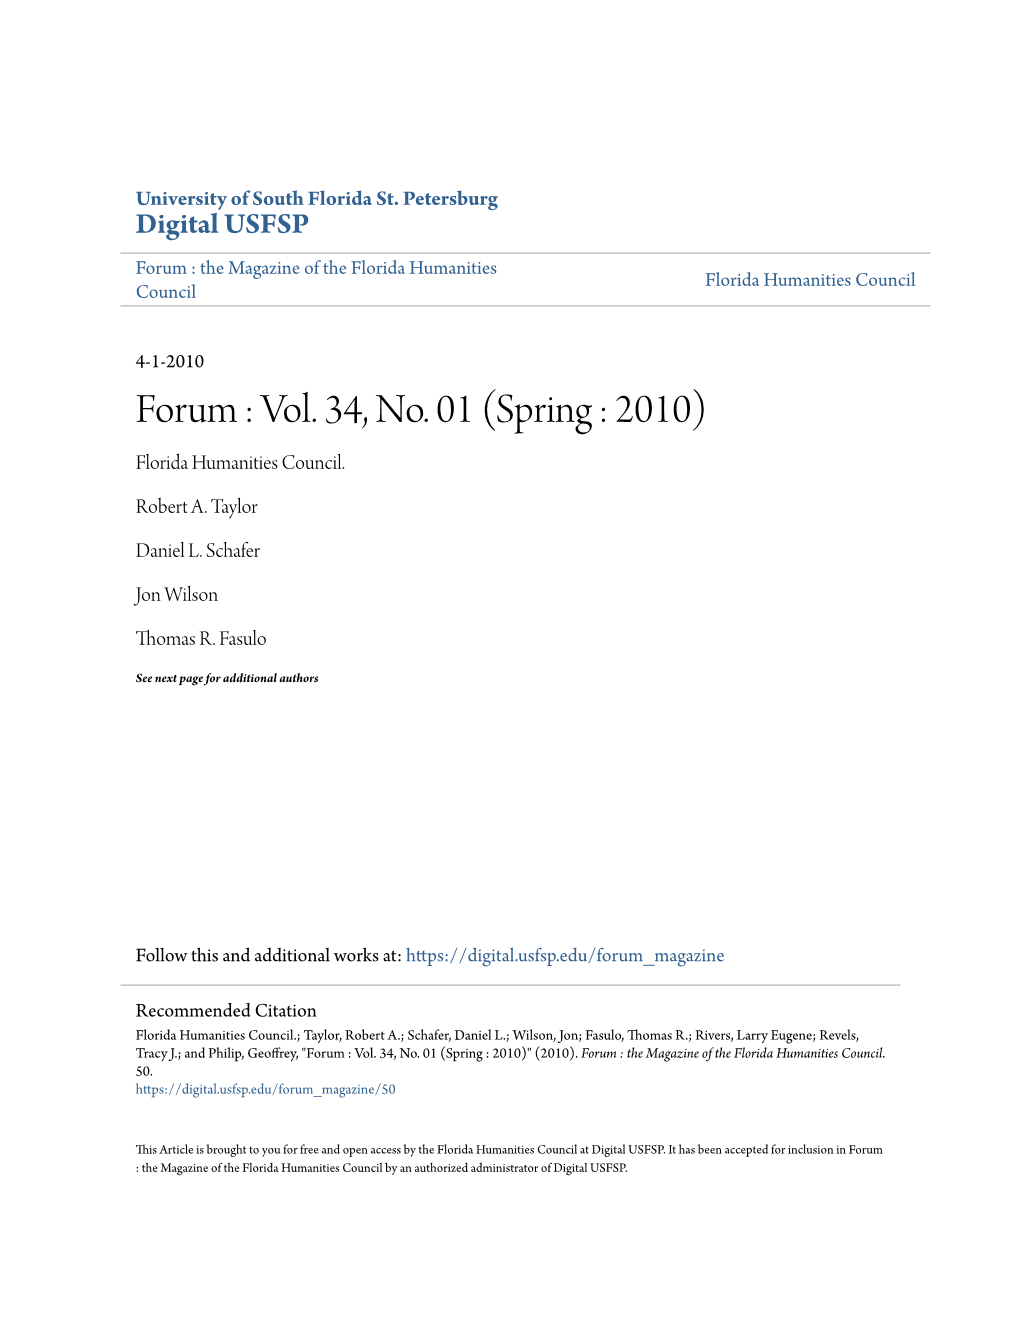 Forum : Vol. 34, No. 01 (Spring : 2010) Florida Humanities Council